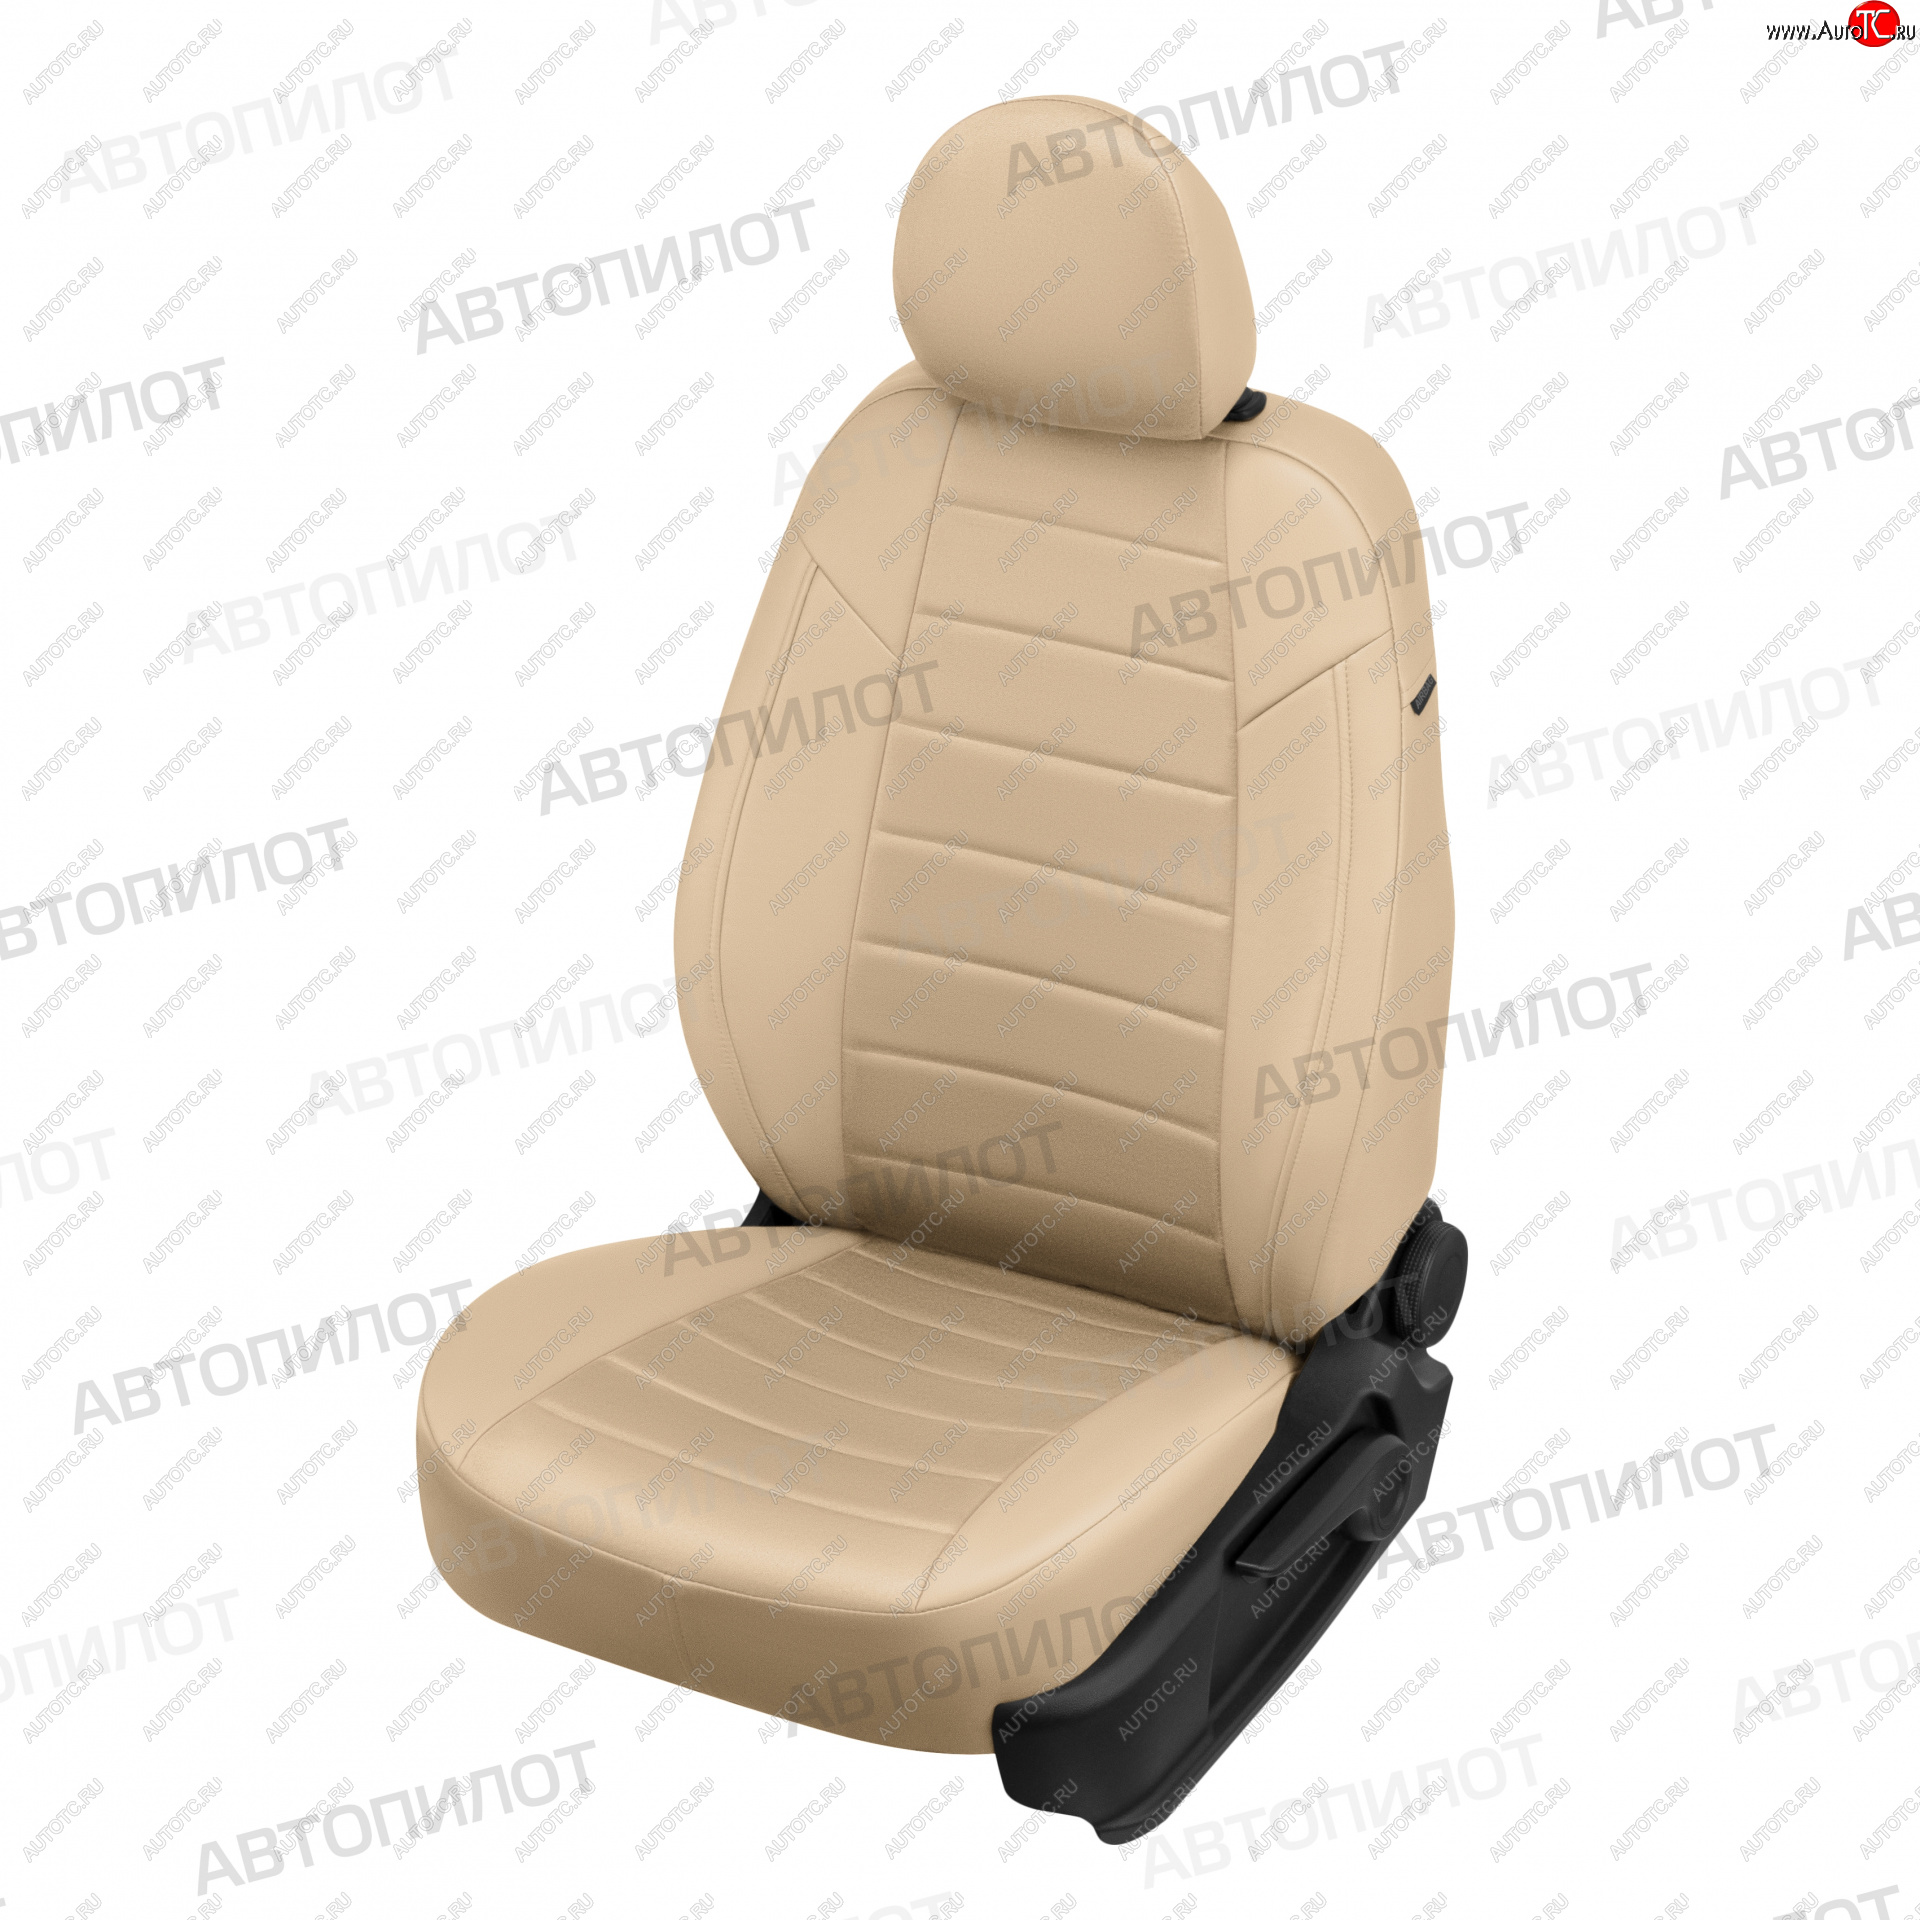 13 449 р. Чехлы сидений (Titanium, экокожа/алькантара) Автопилот  Ford Kuga  1 (2008-2013) (бежевый)